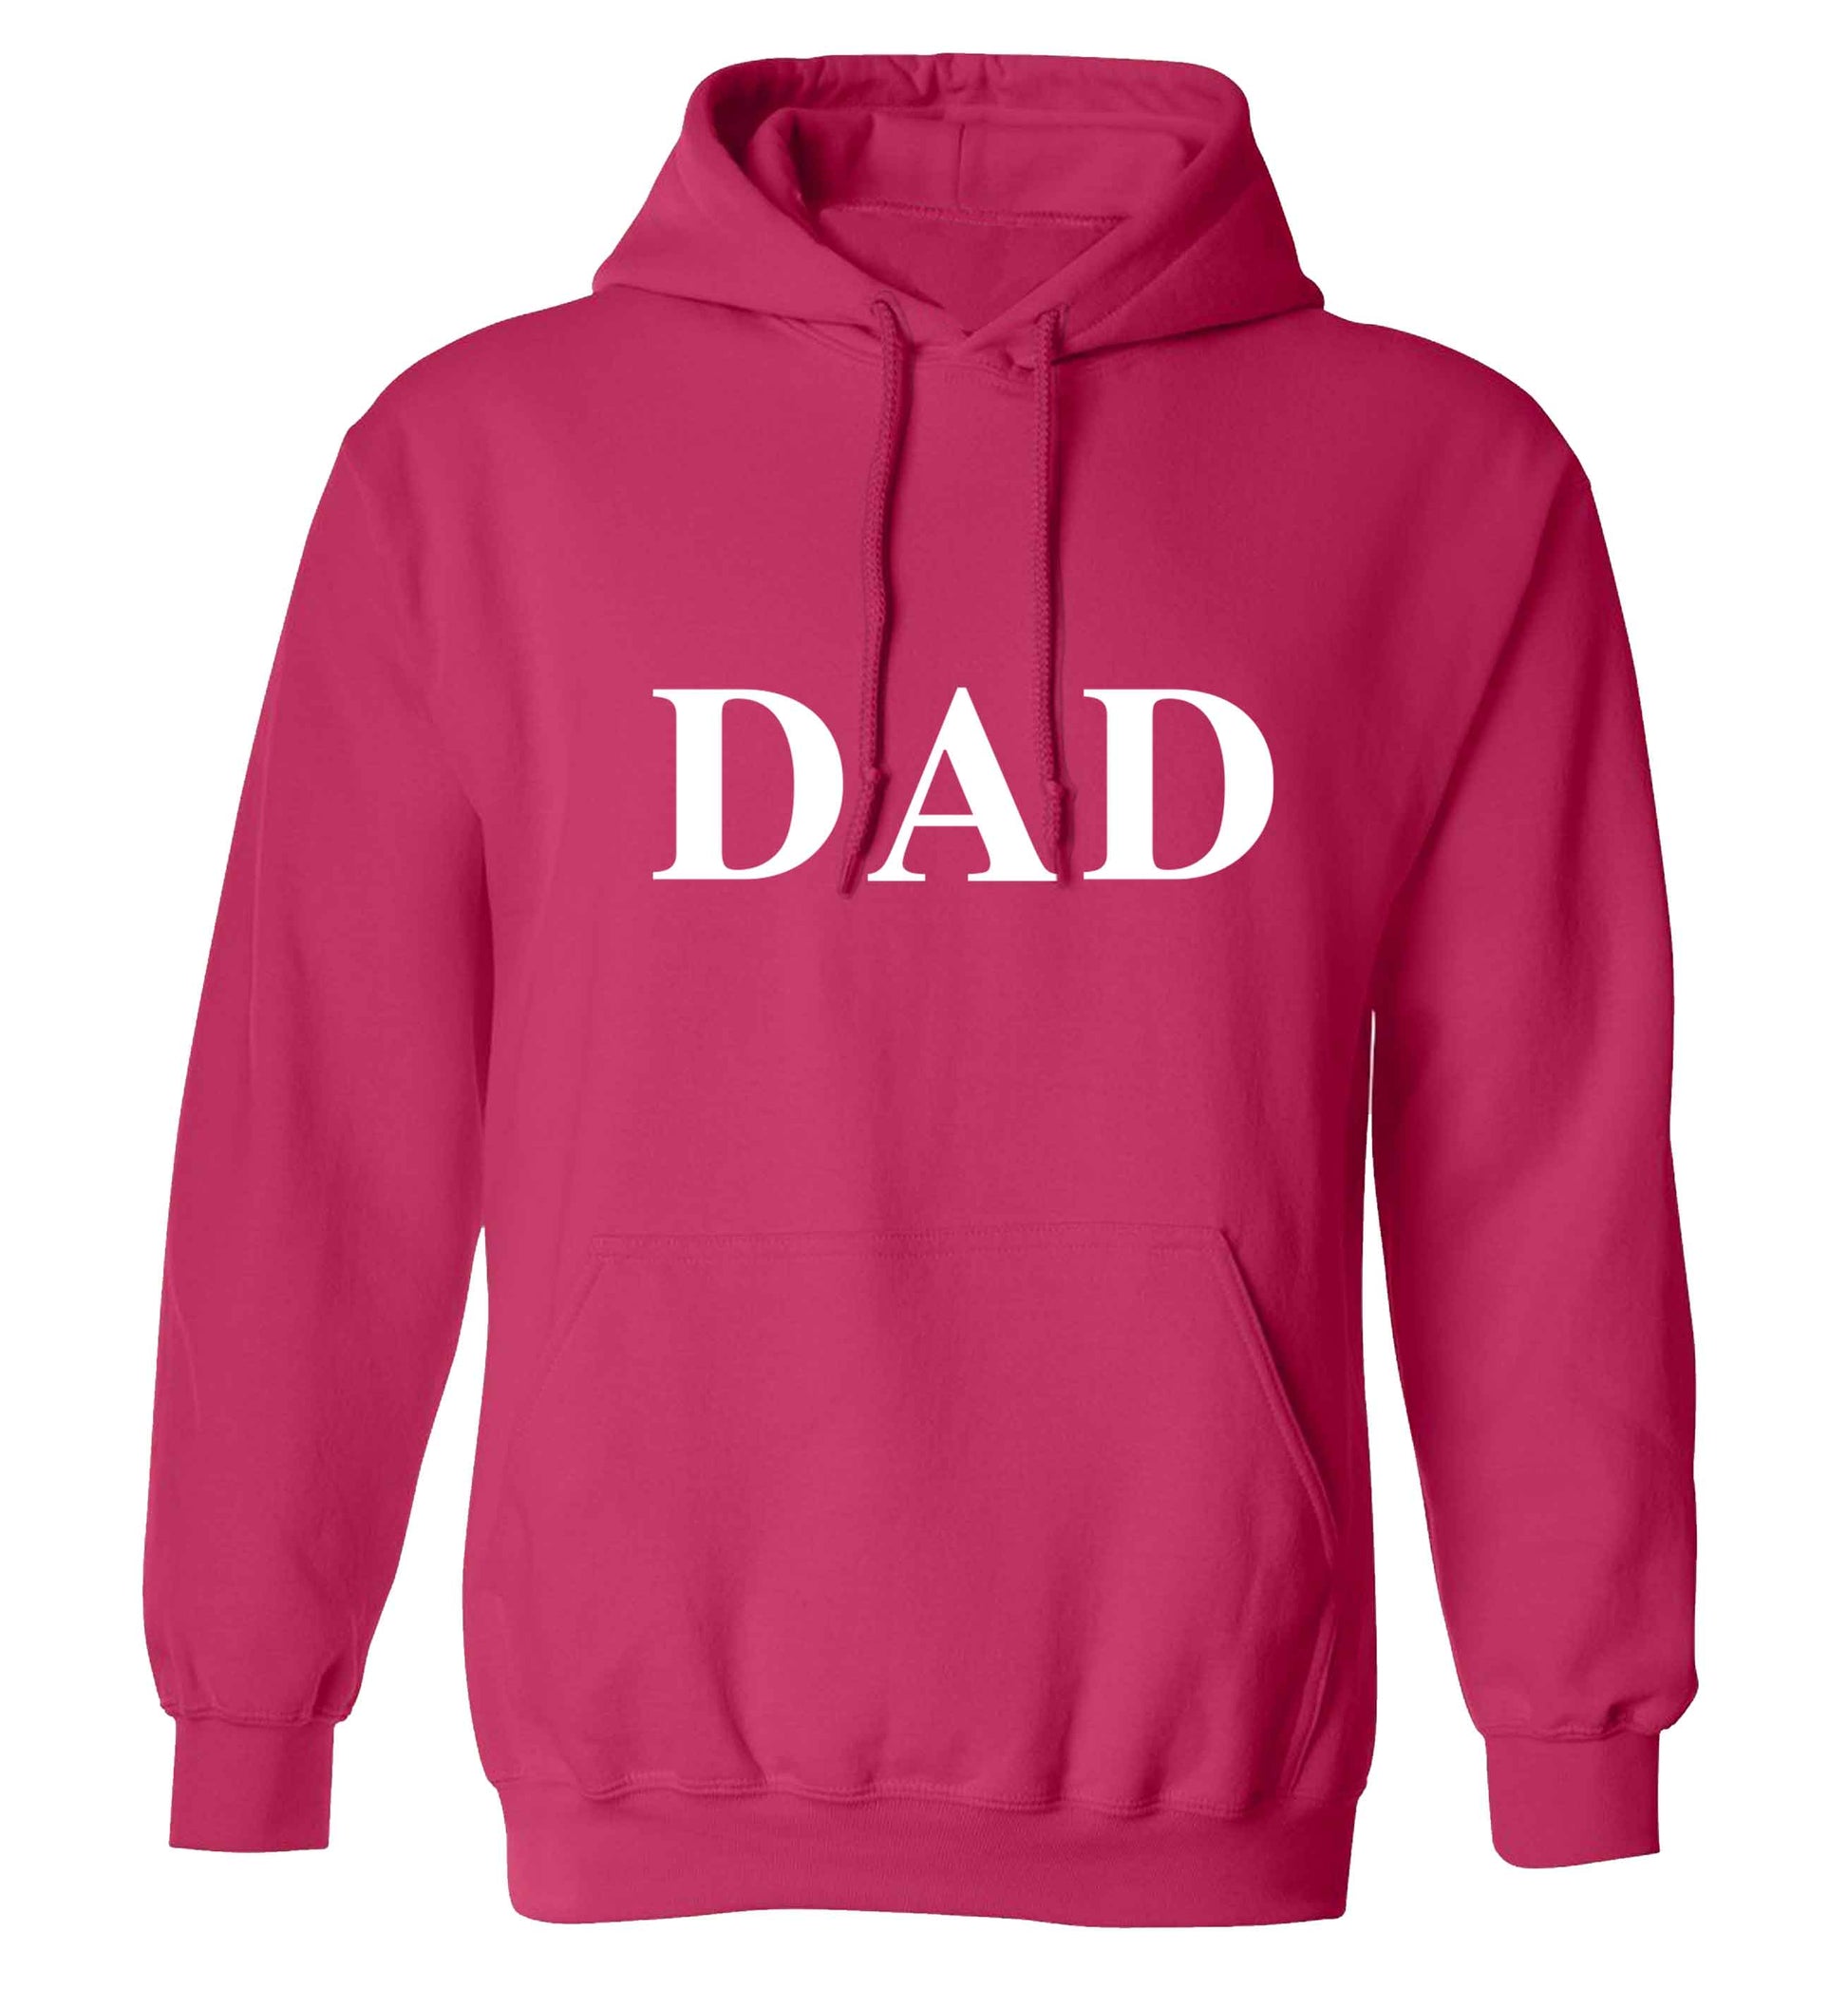 Dad adults unisex pink hoodie 2XL